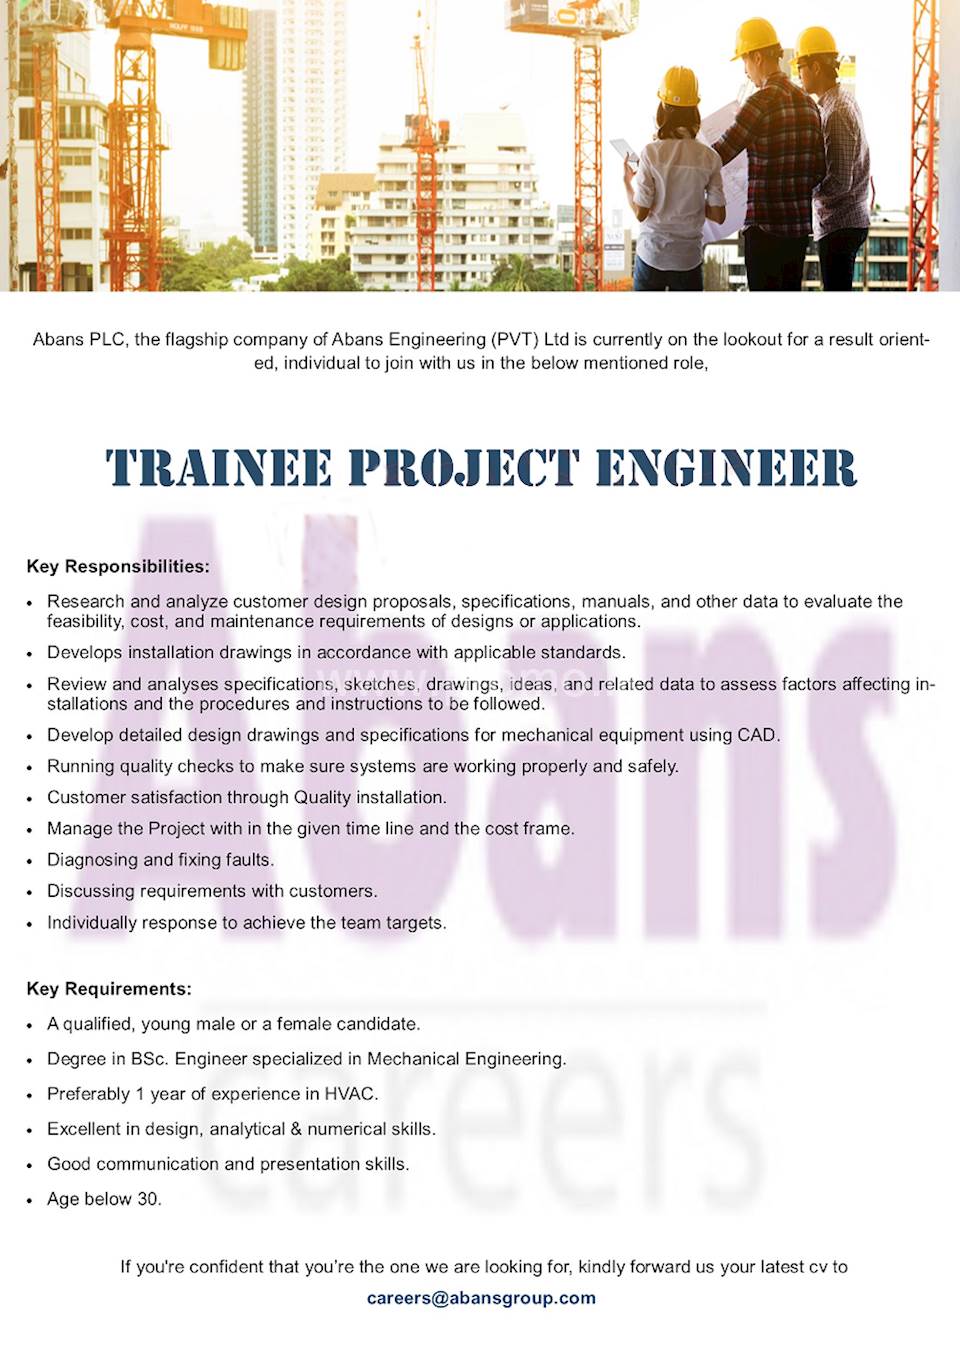 Project management trainee job